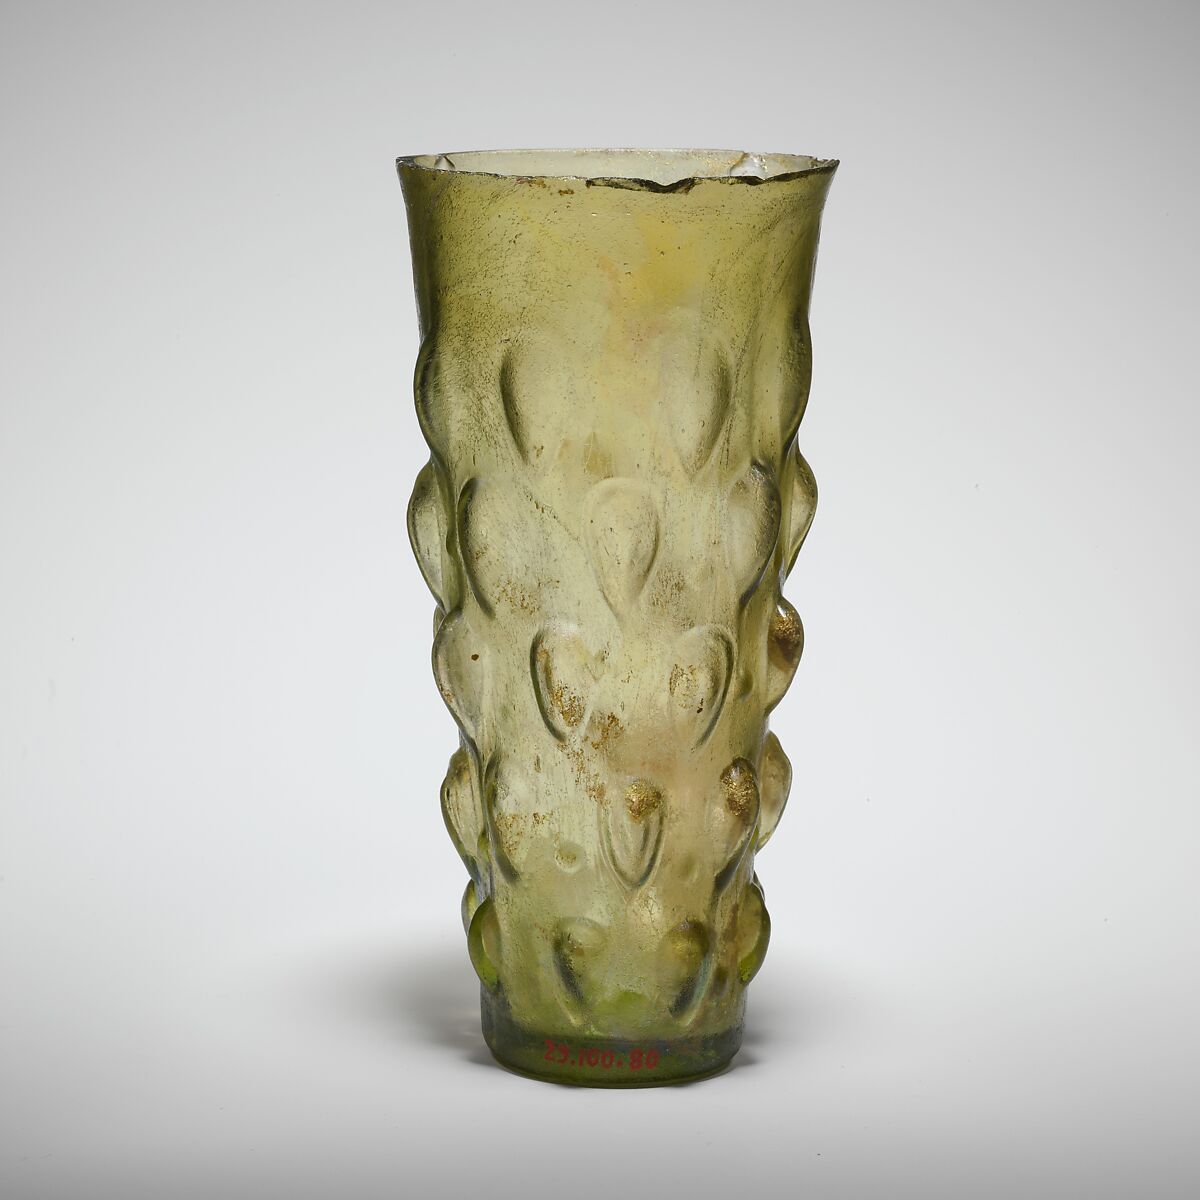 Glass beaker, Glass, Roman 